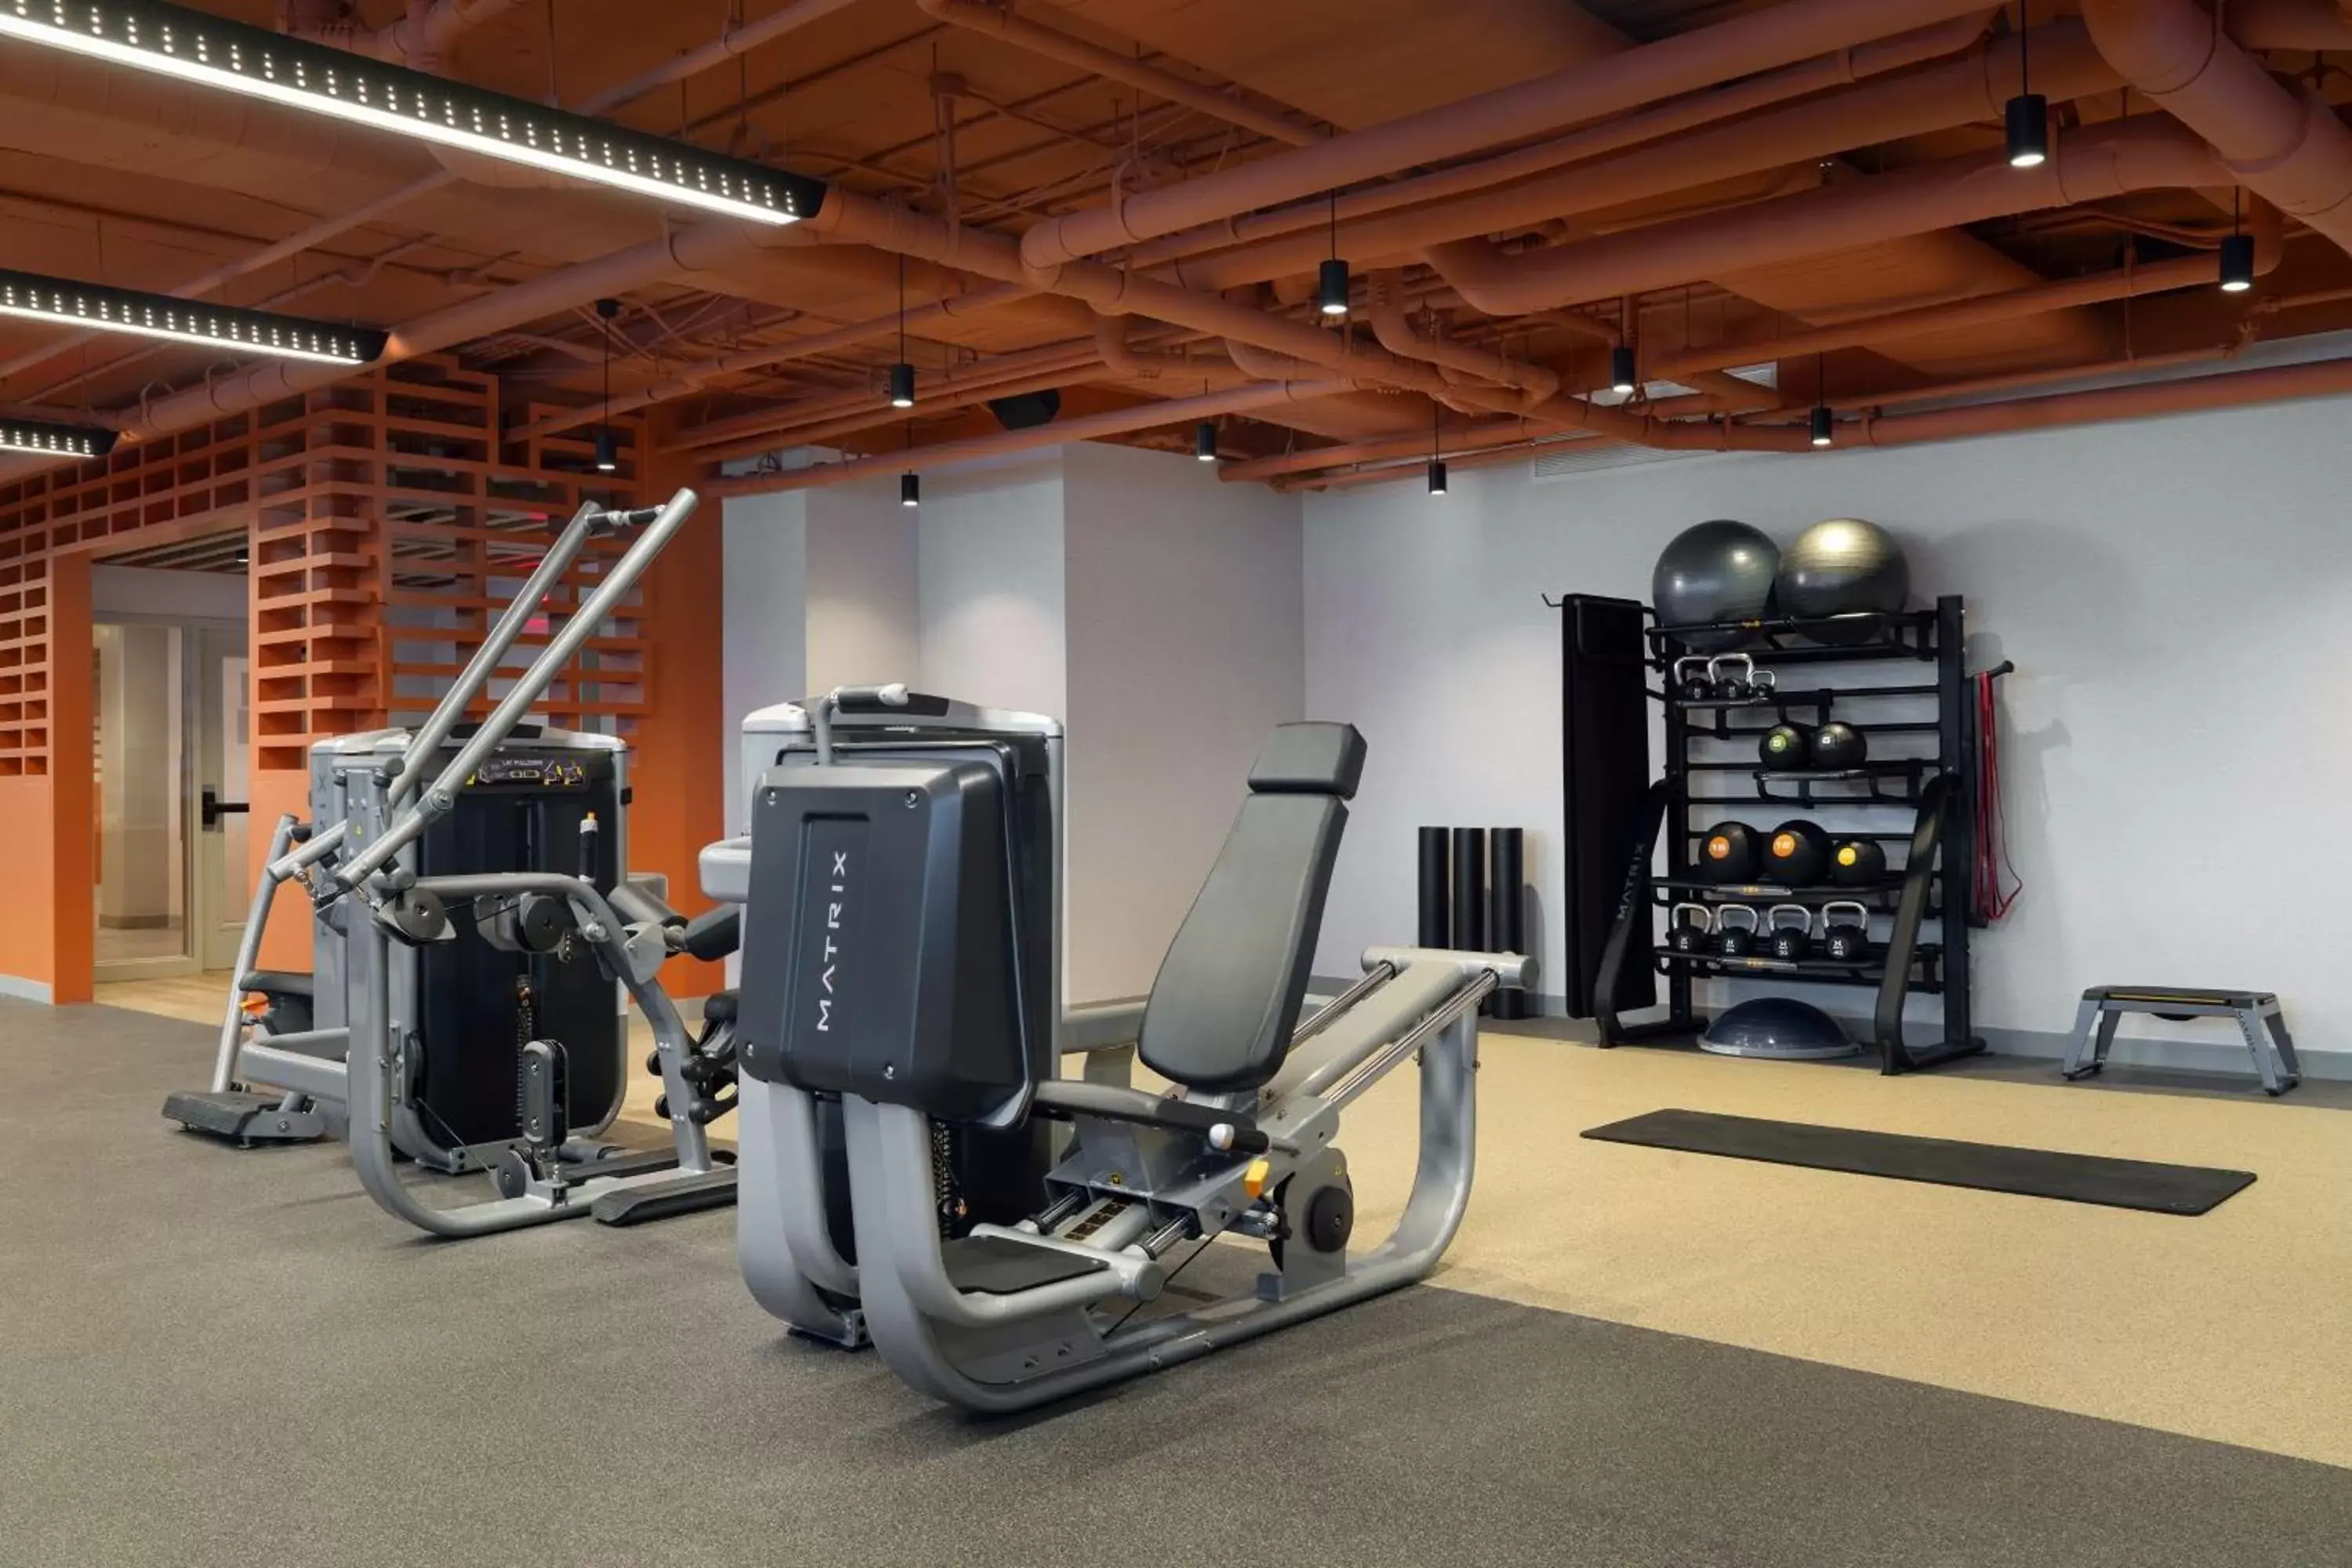 Fitness centre/facilities, Fitness Center/Facilities in Aloft Kansas City Country Club Plaza